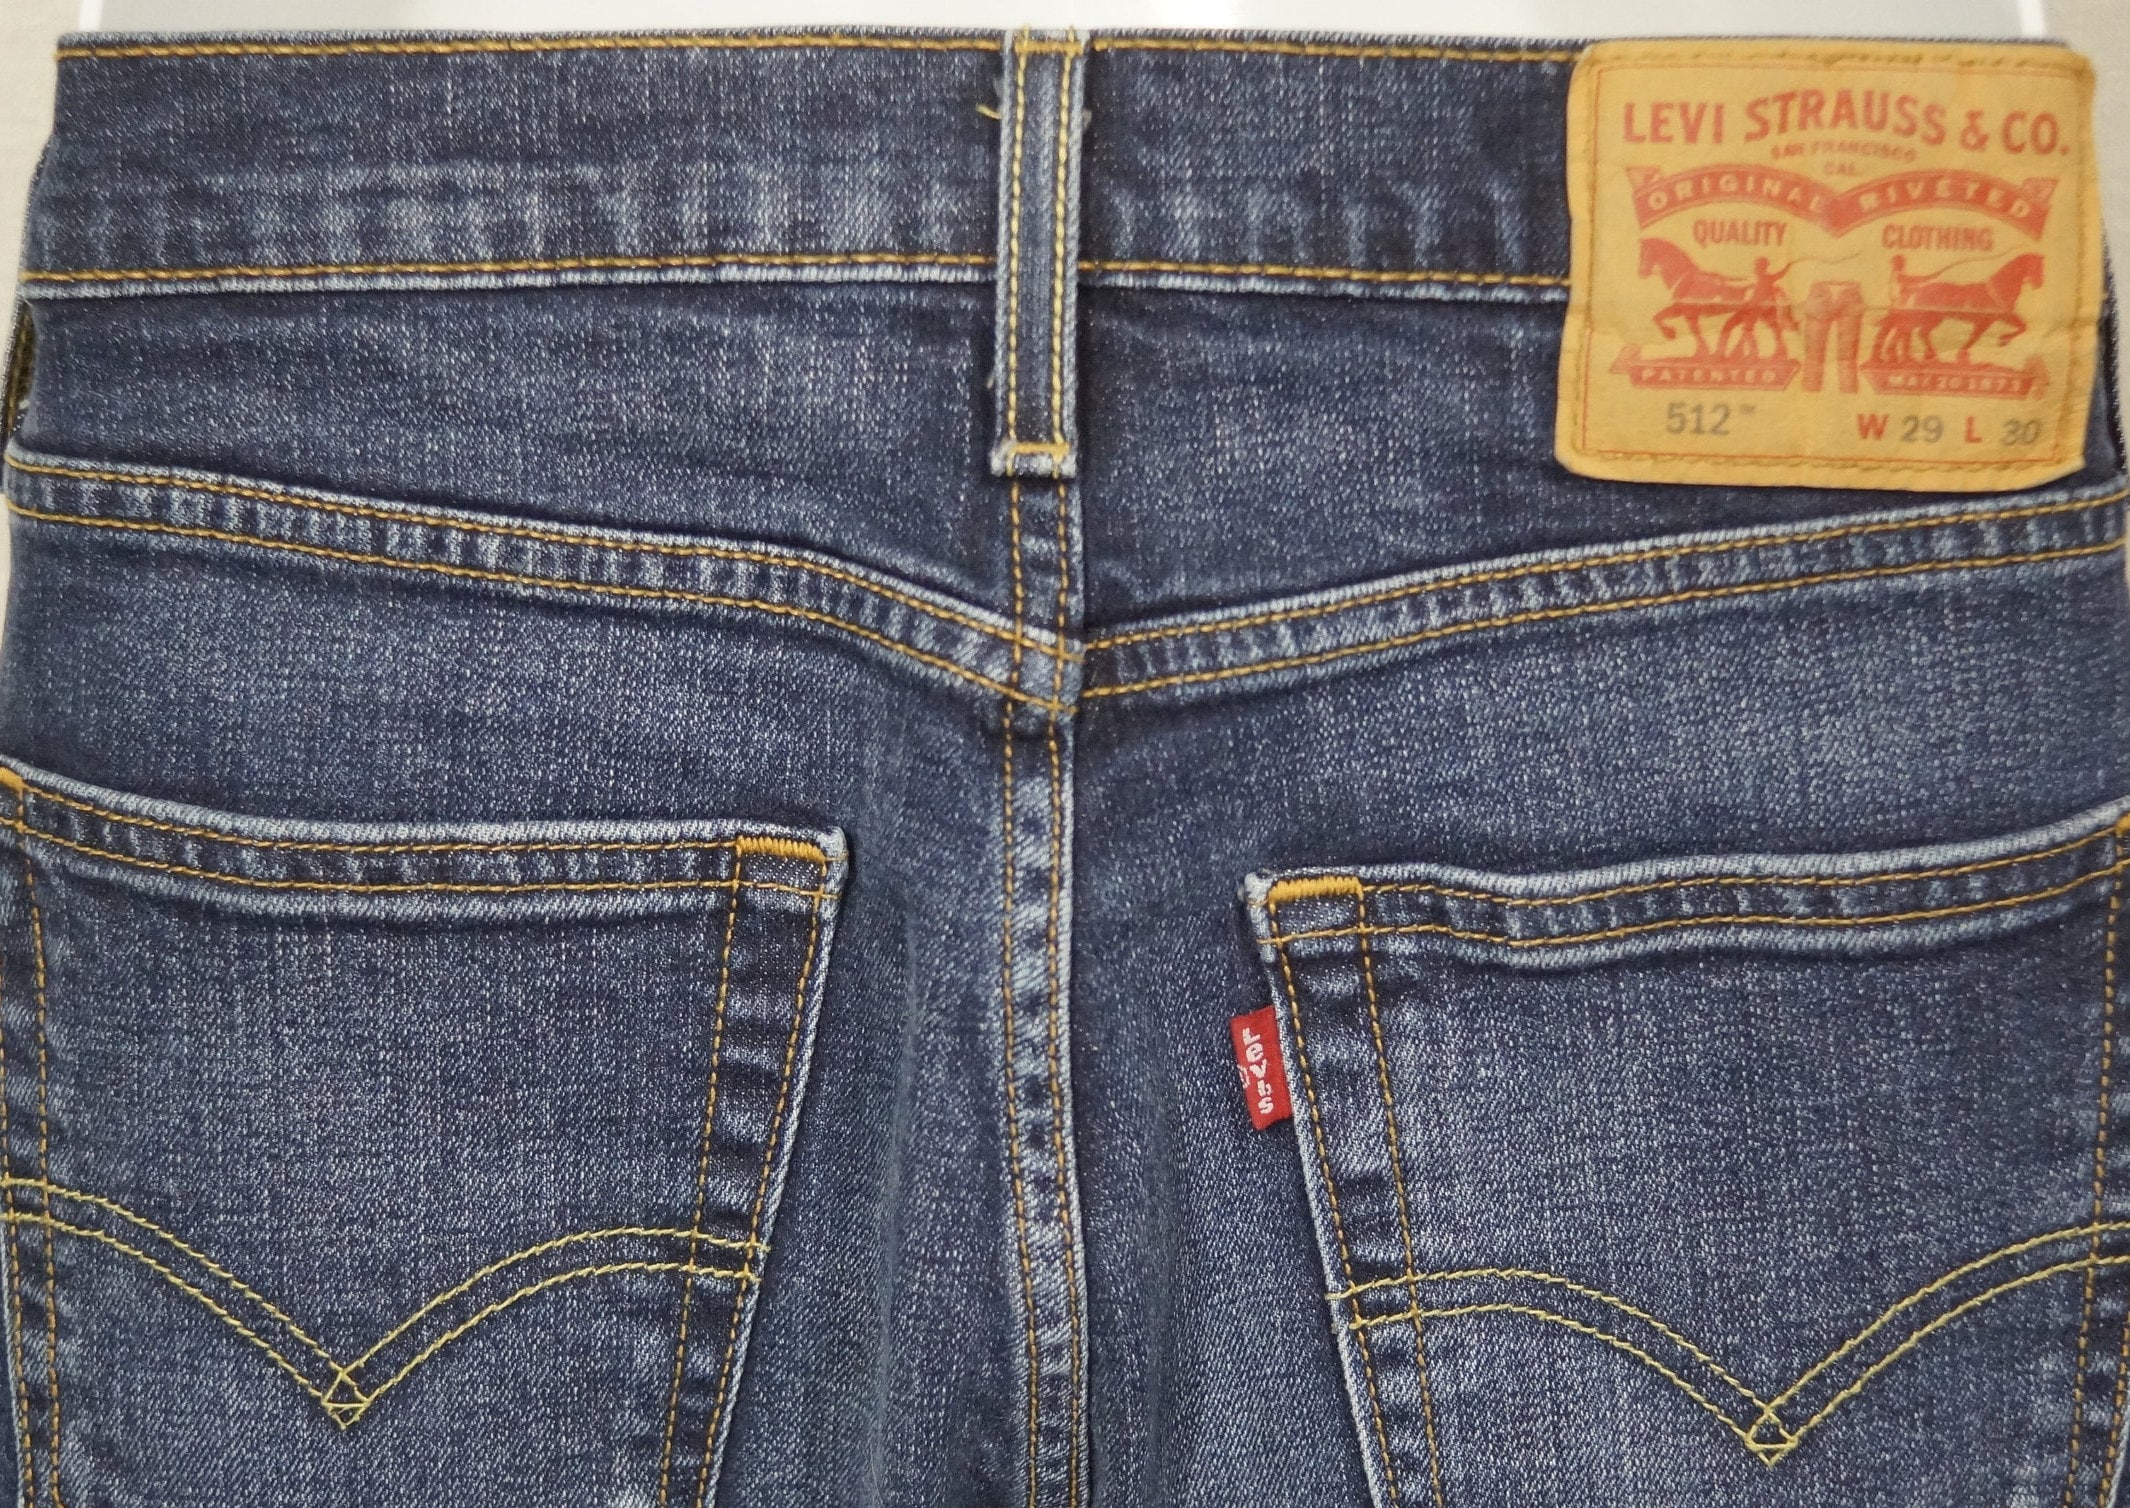 Levi's Jeans Red Tab Cotton Denim Zipper Fly - Size 29 x 30 - EXCELLENT